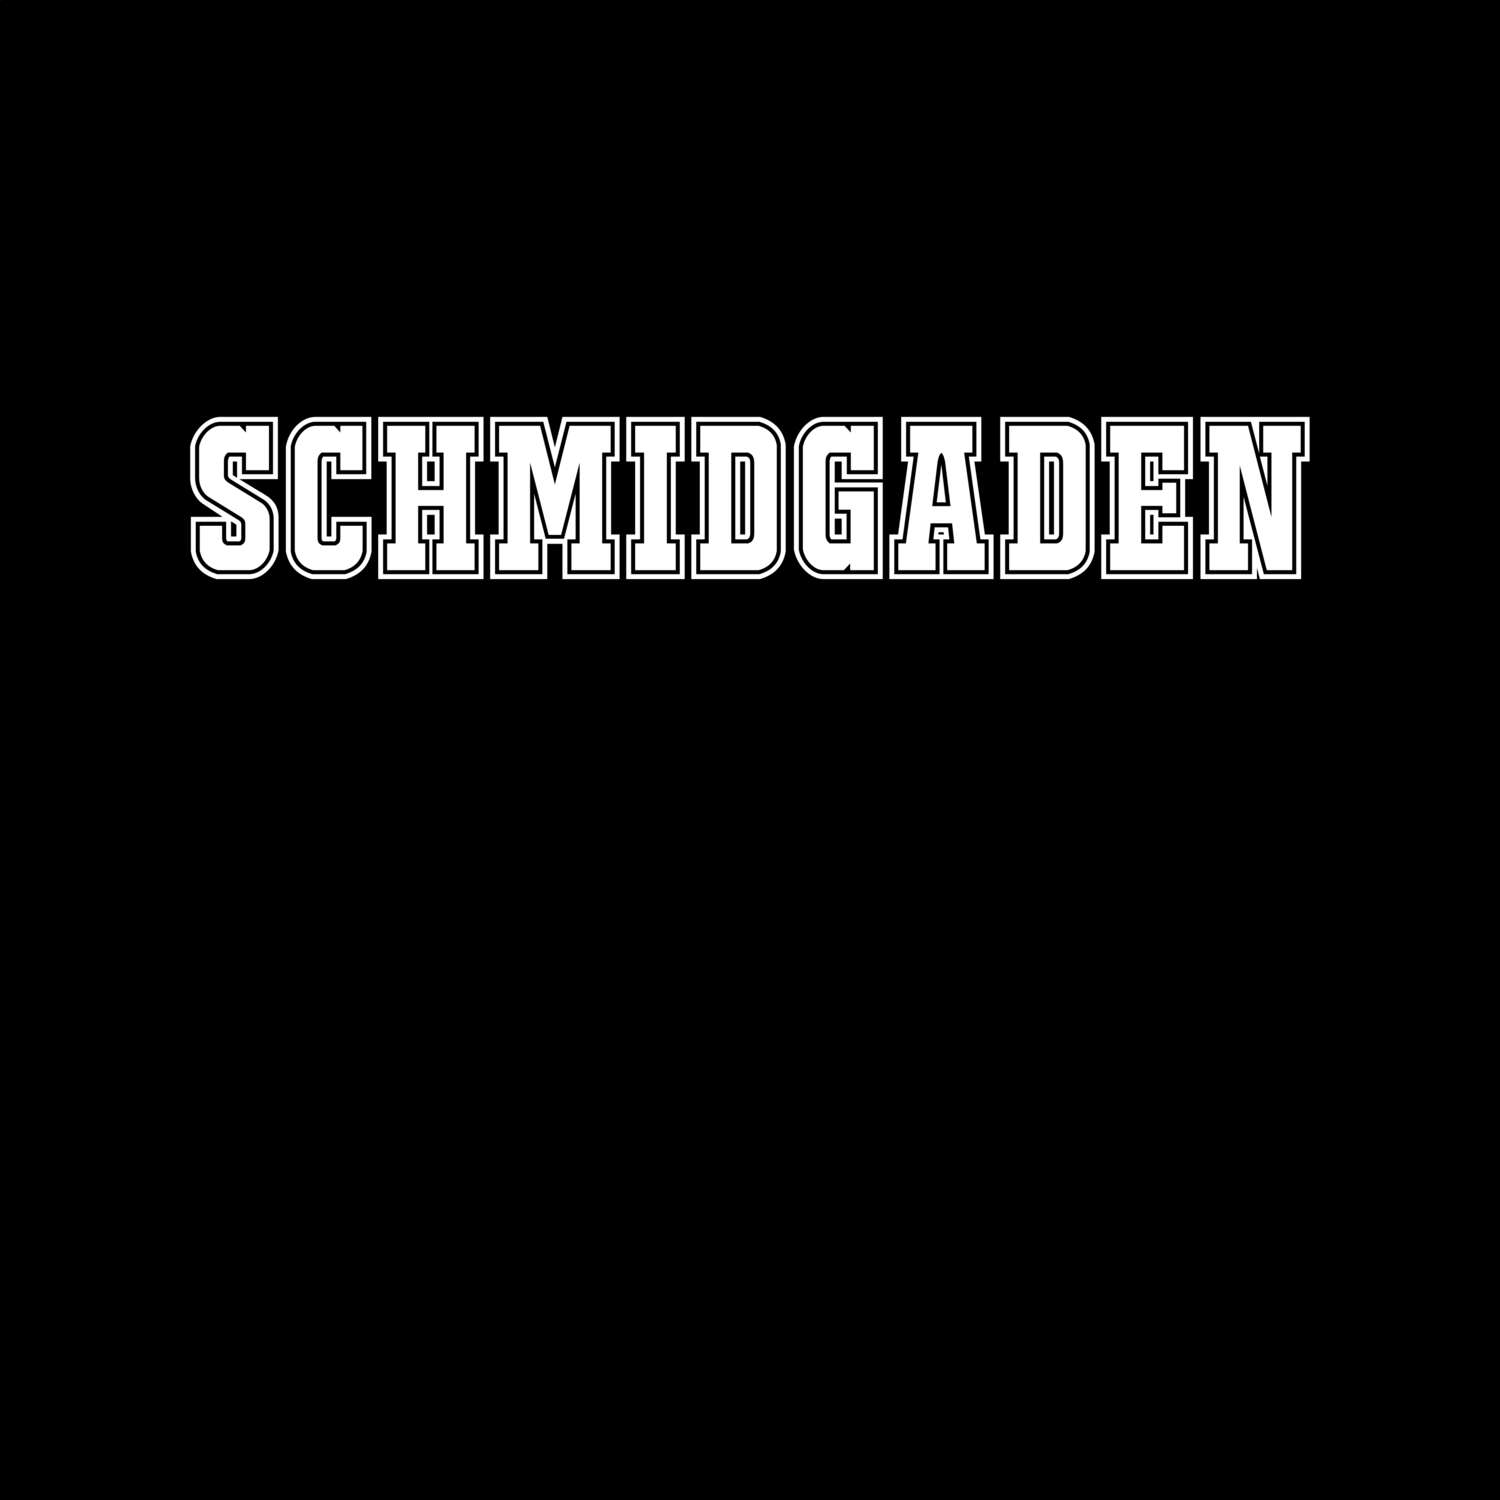 Schmidgaden T-Shirt »Classic«